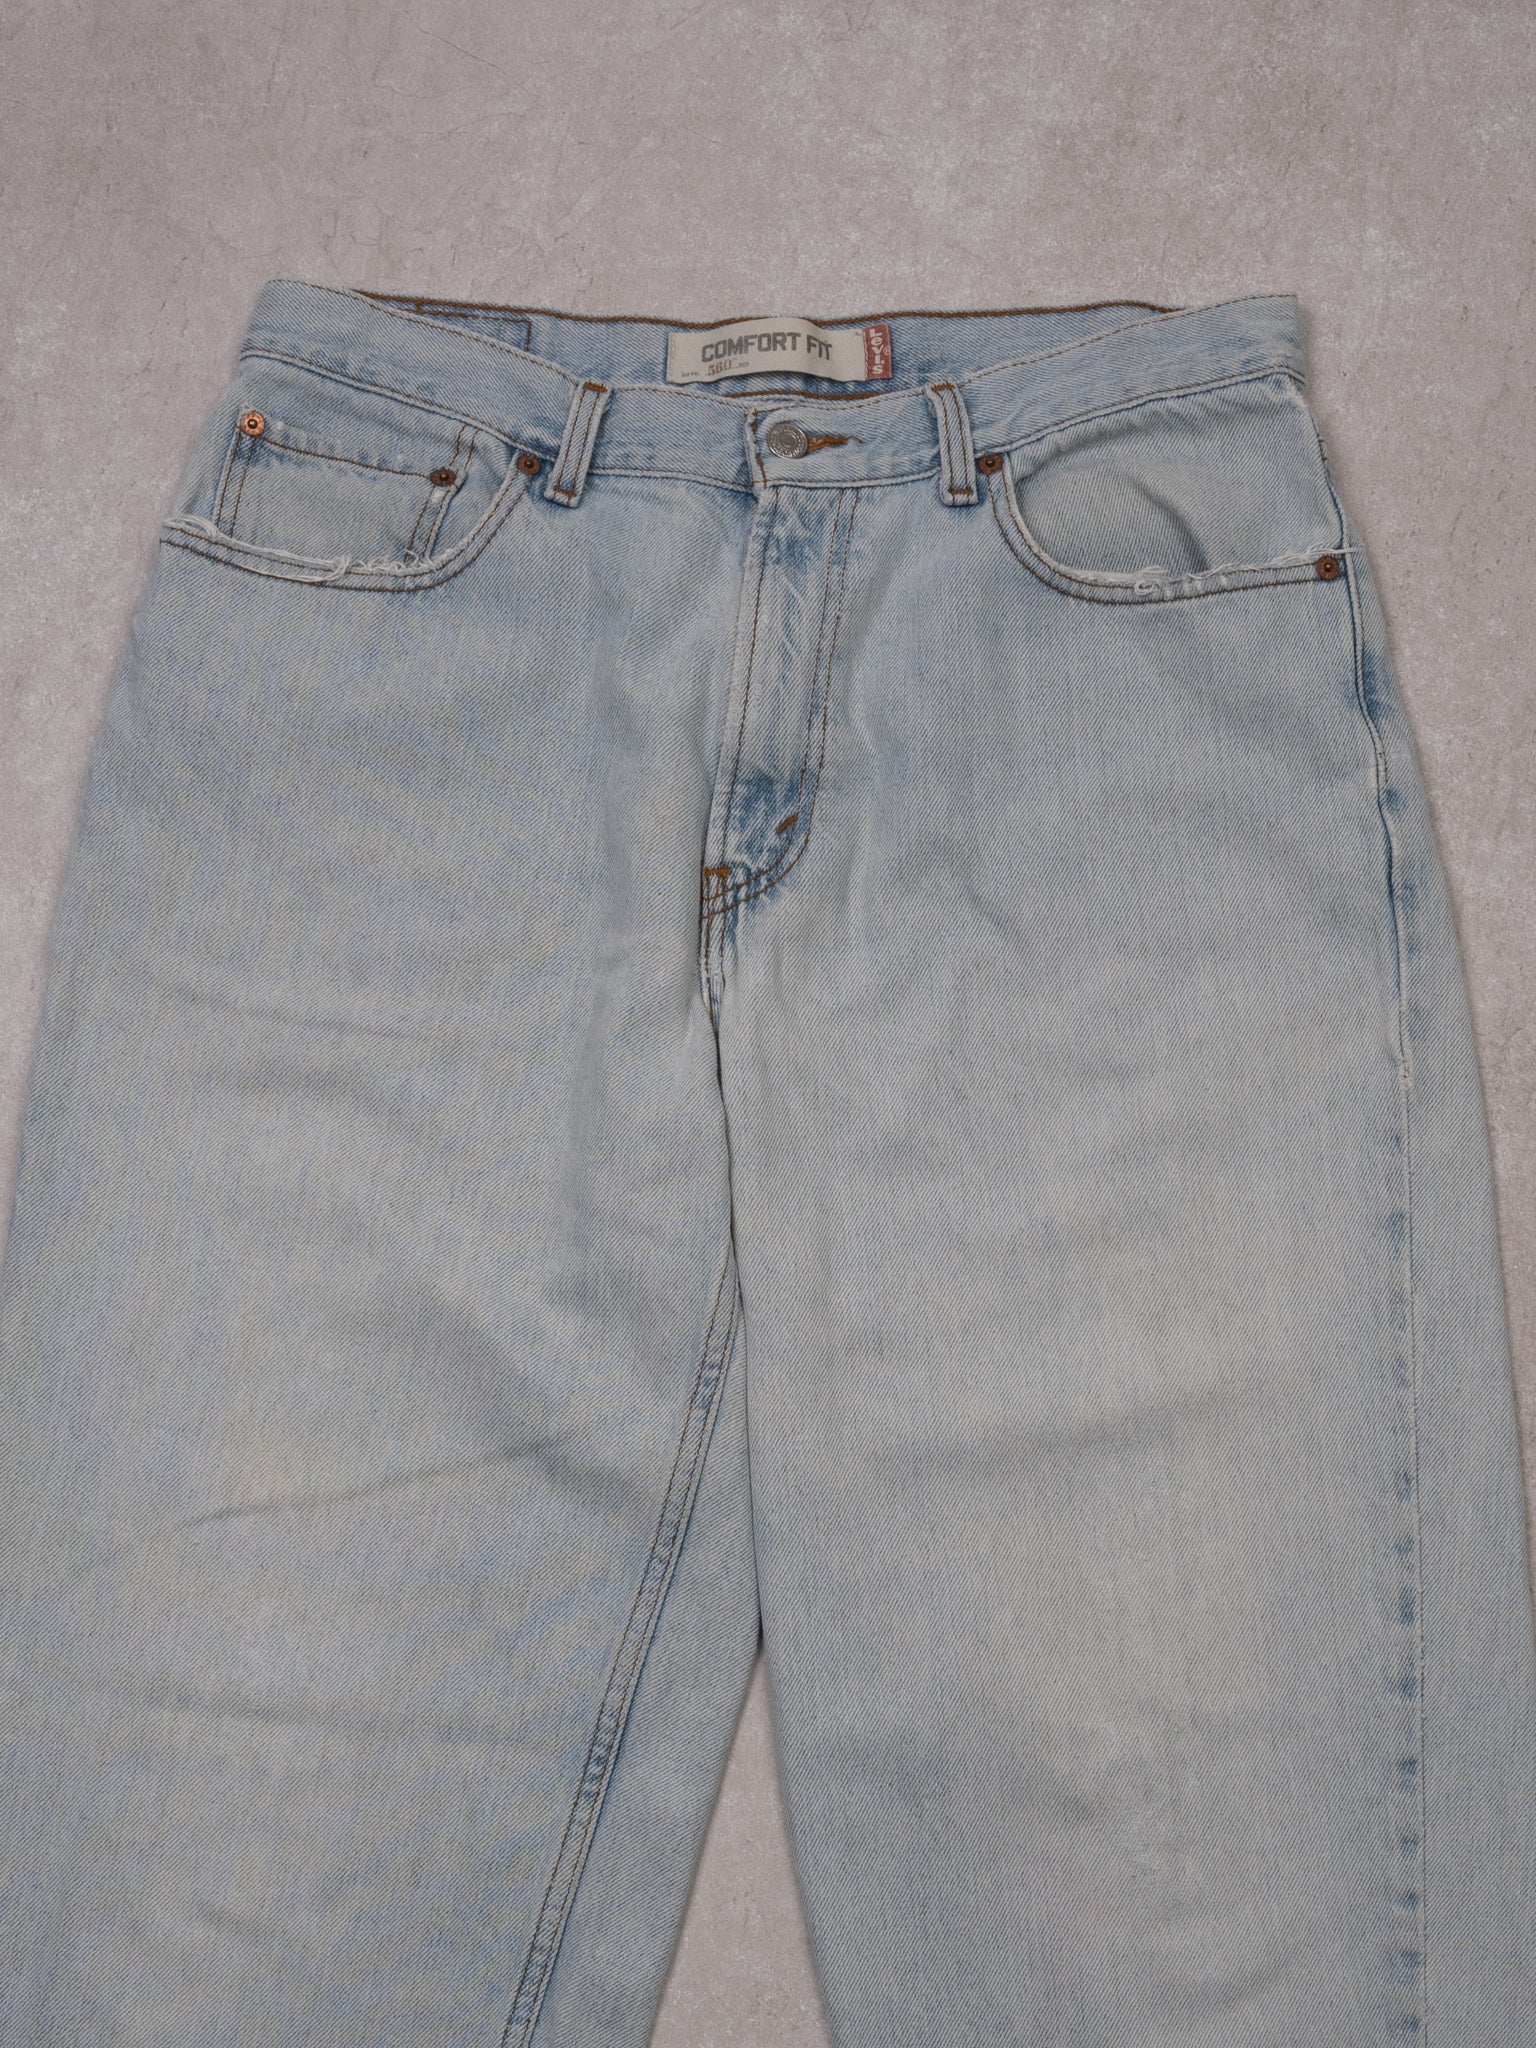 Vintage Light Blue Levi 560 Comfort Fit Denim Jeans (32x32)